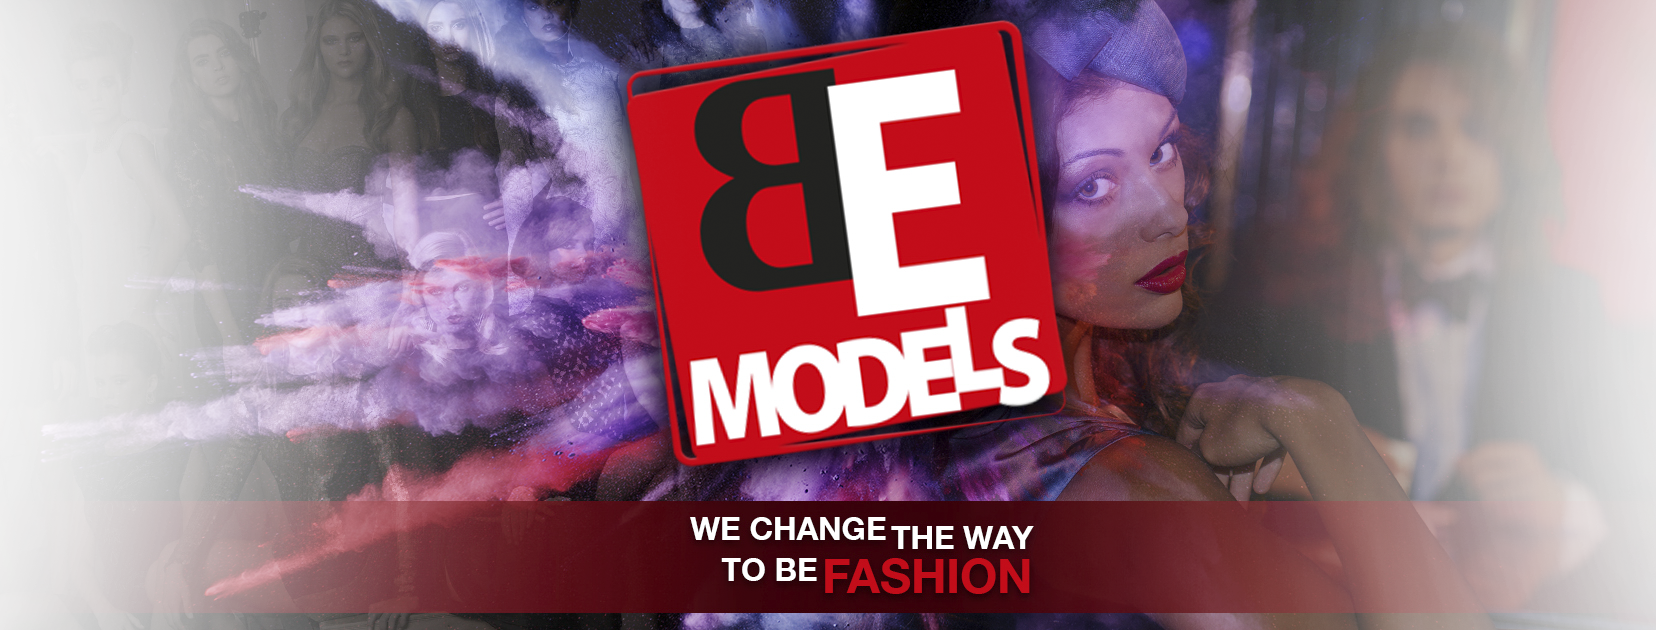 agenzia casting moda bemodels-models-management-hostess-steward-promoter-concorso-bellezza-moda-casting